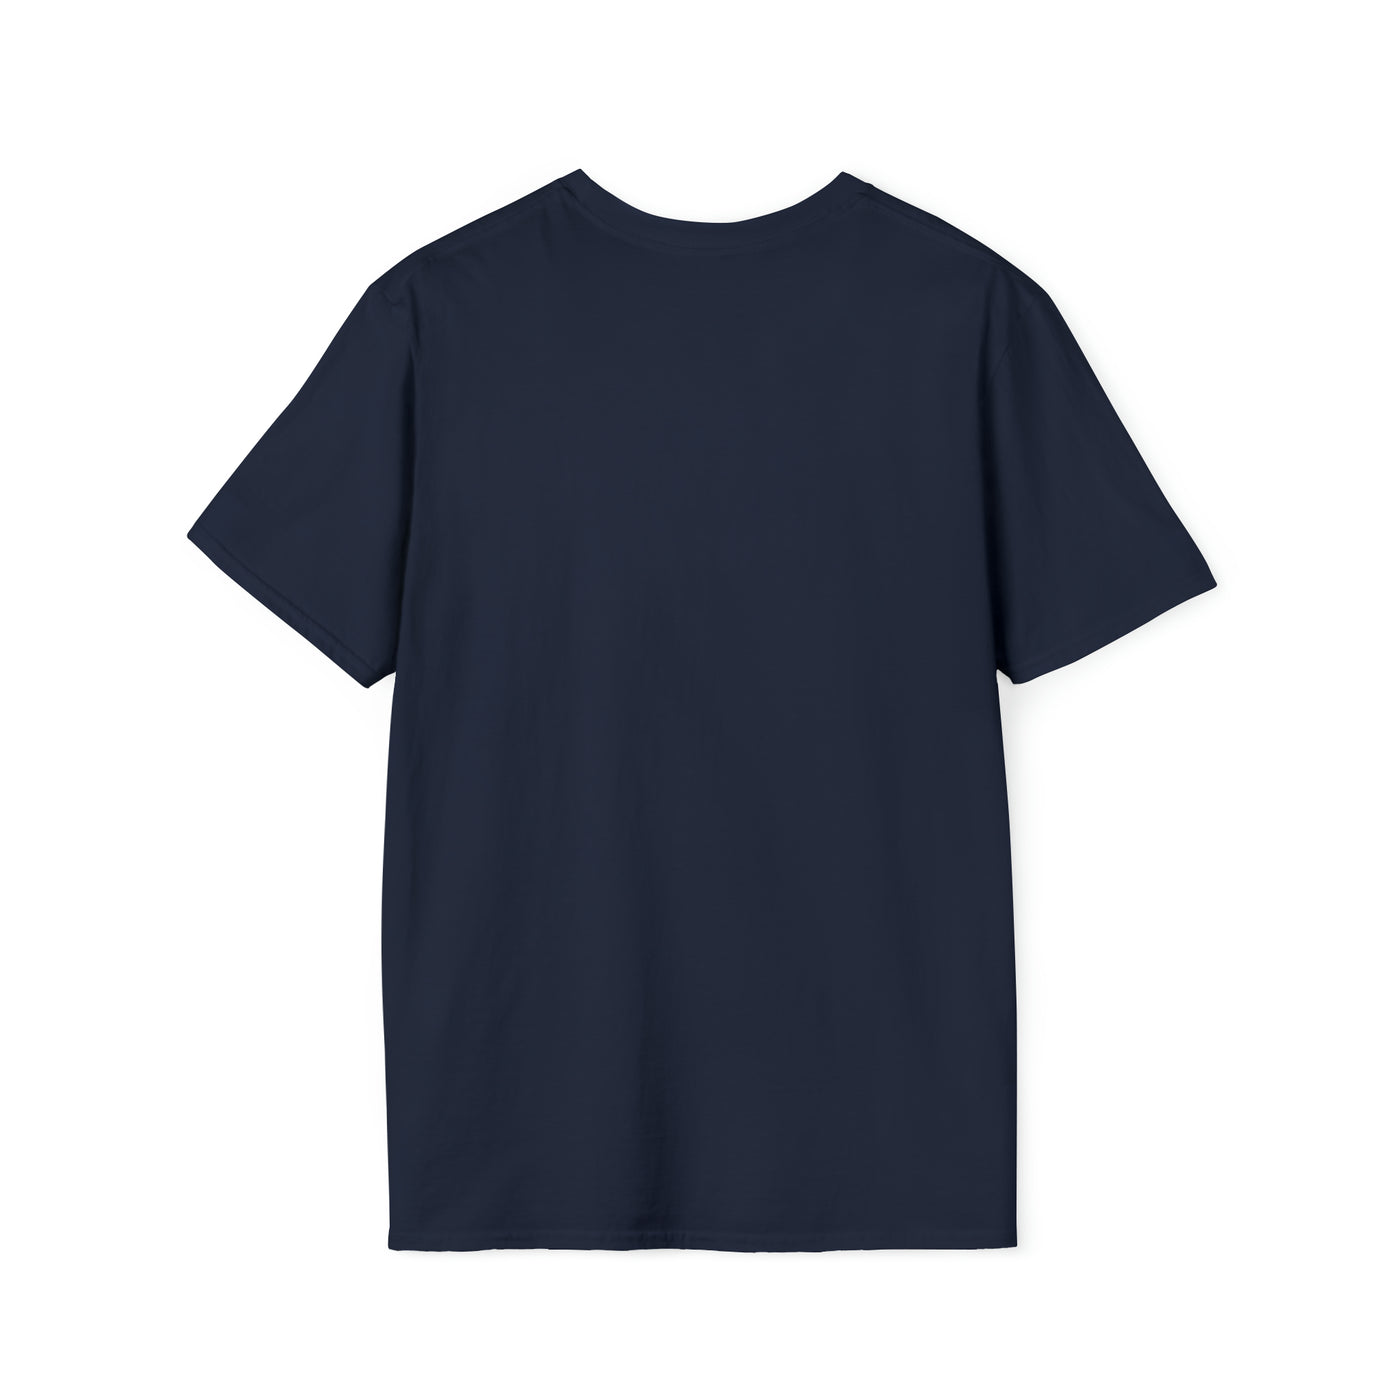 Unisex Cotton T Shirt | Short Sleeve T Shirt | Let's Travel